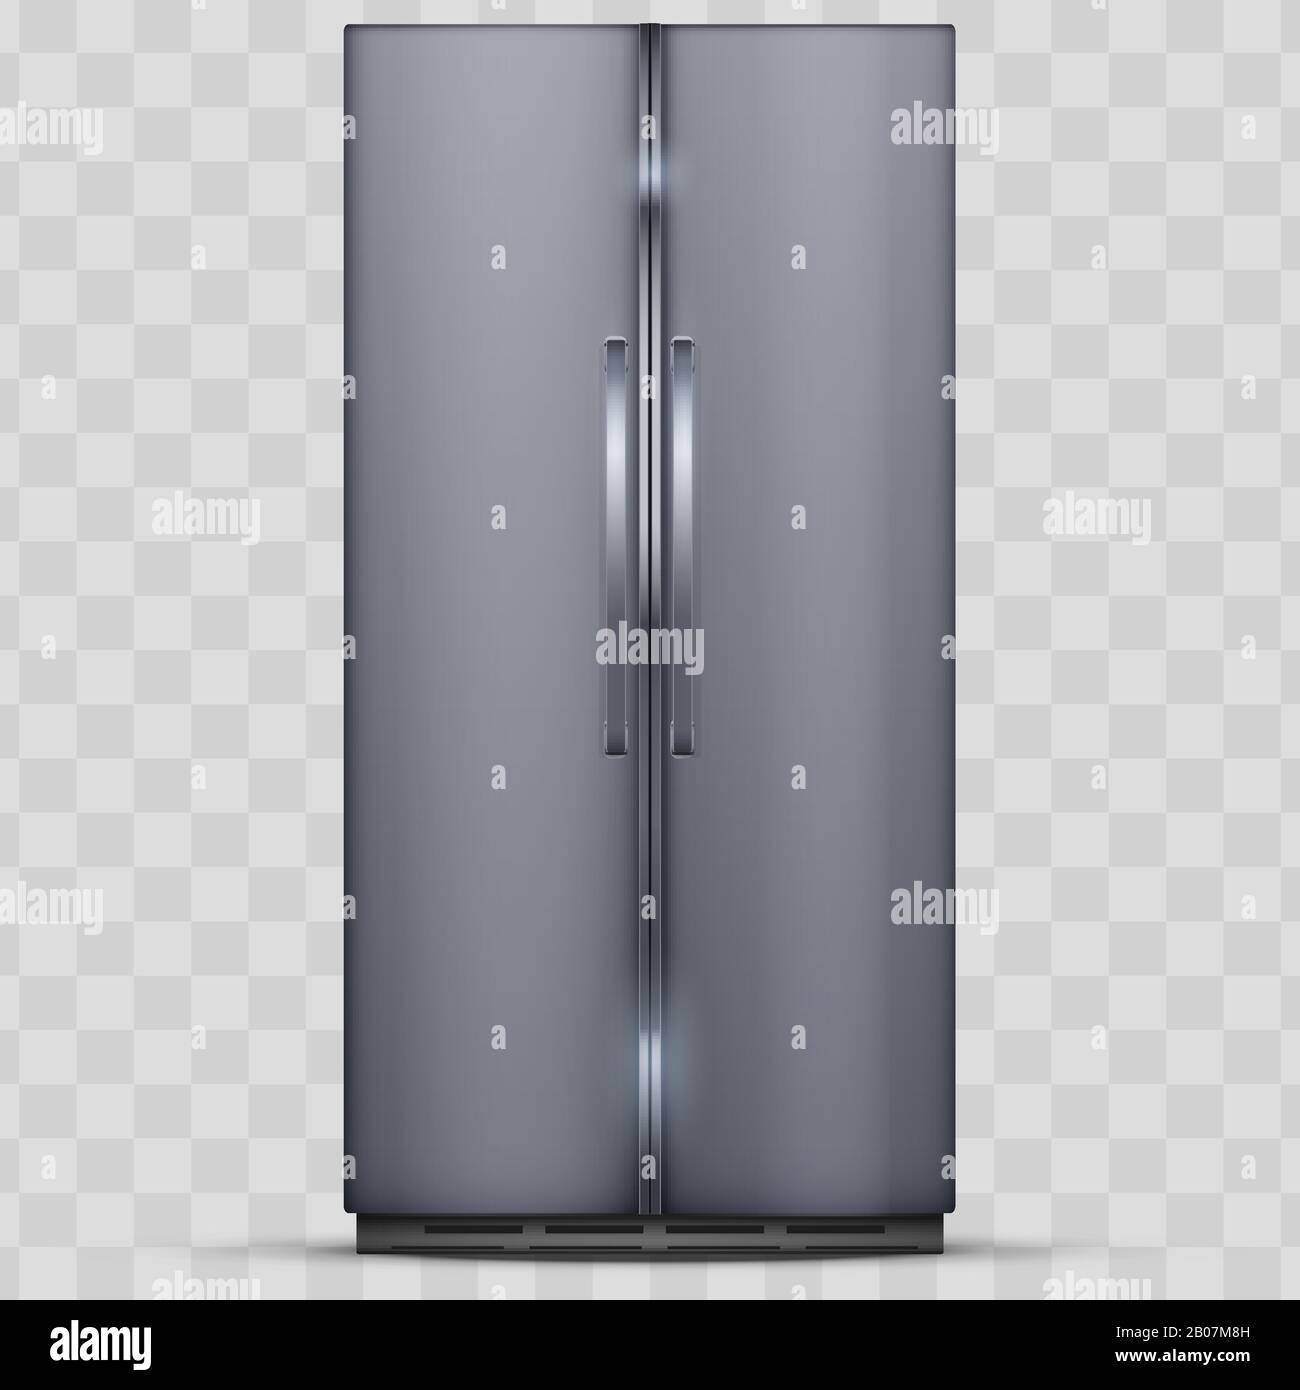 Modern Fridge Freezer refrigerator. Stock Vector